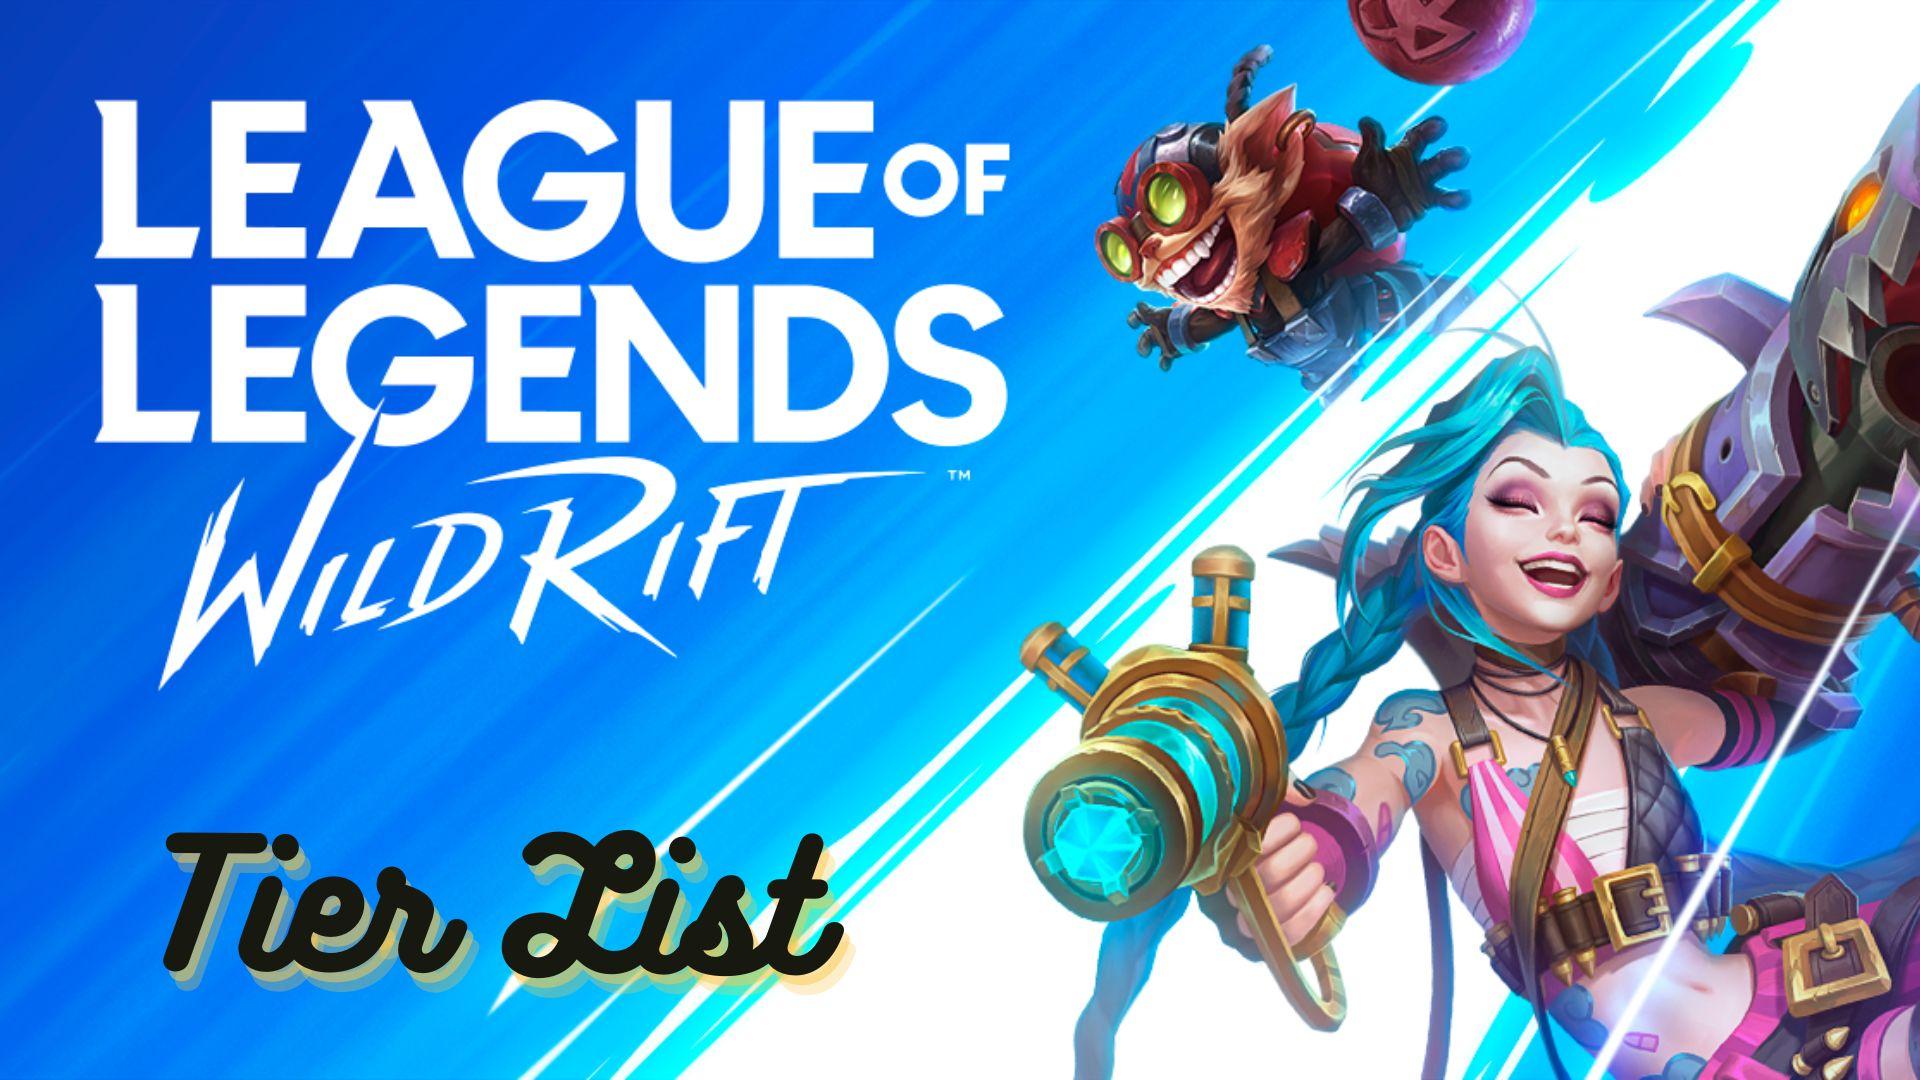 League of Legends Wild Rift Blitzcrank Build Guide, Blitzcrank Skill Combo  and More!-Game Guides-LDPlayer